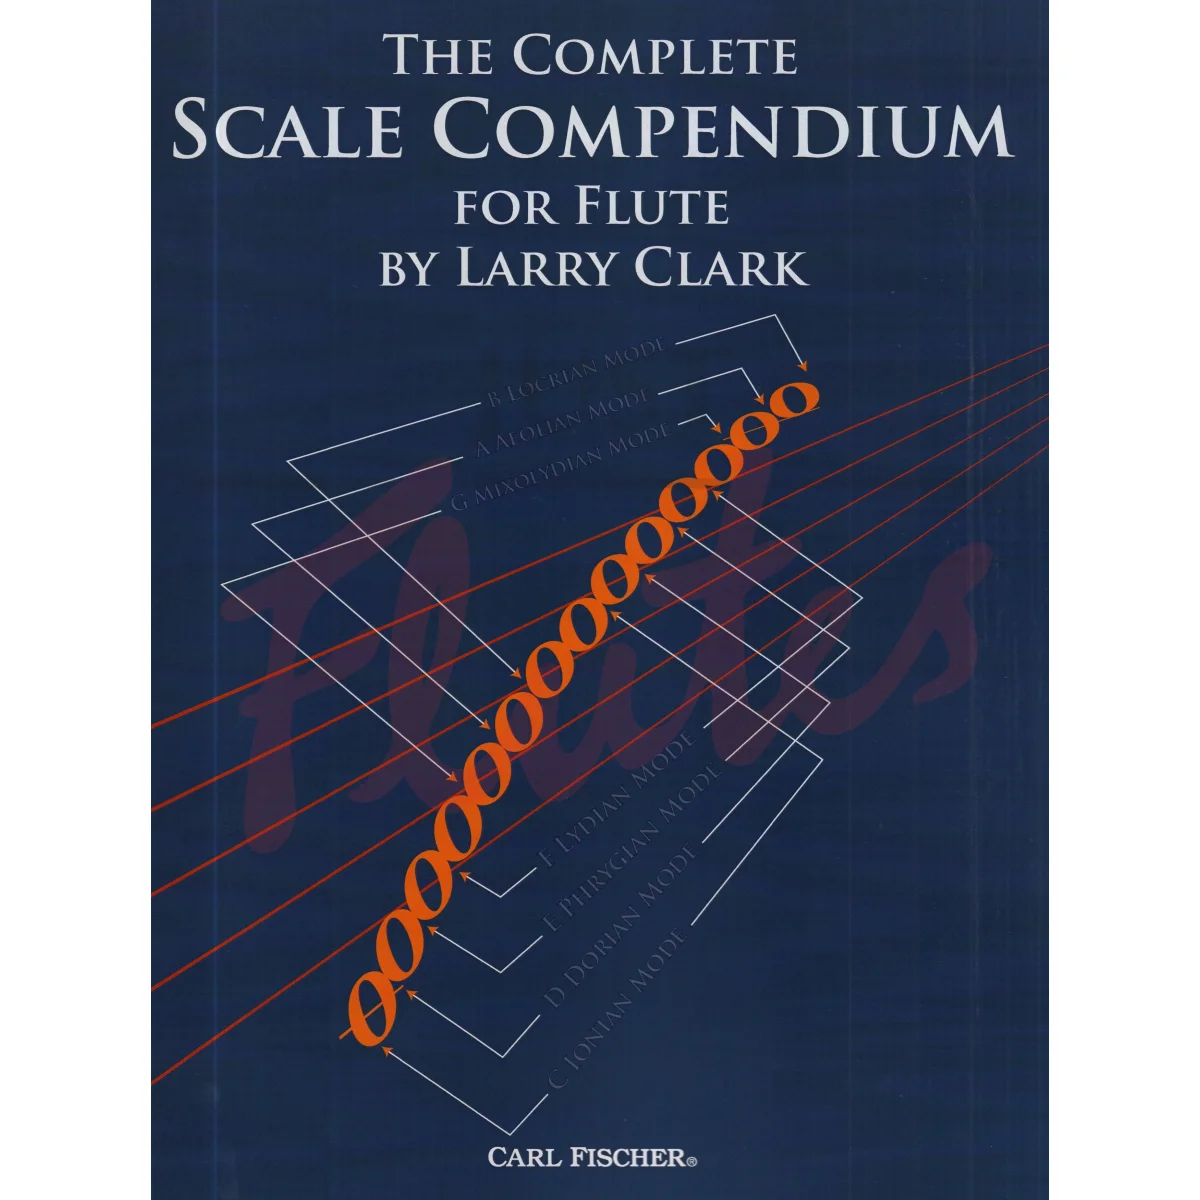 The Complete Scale Compendium for Flute